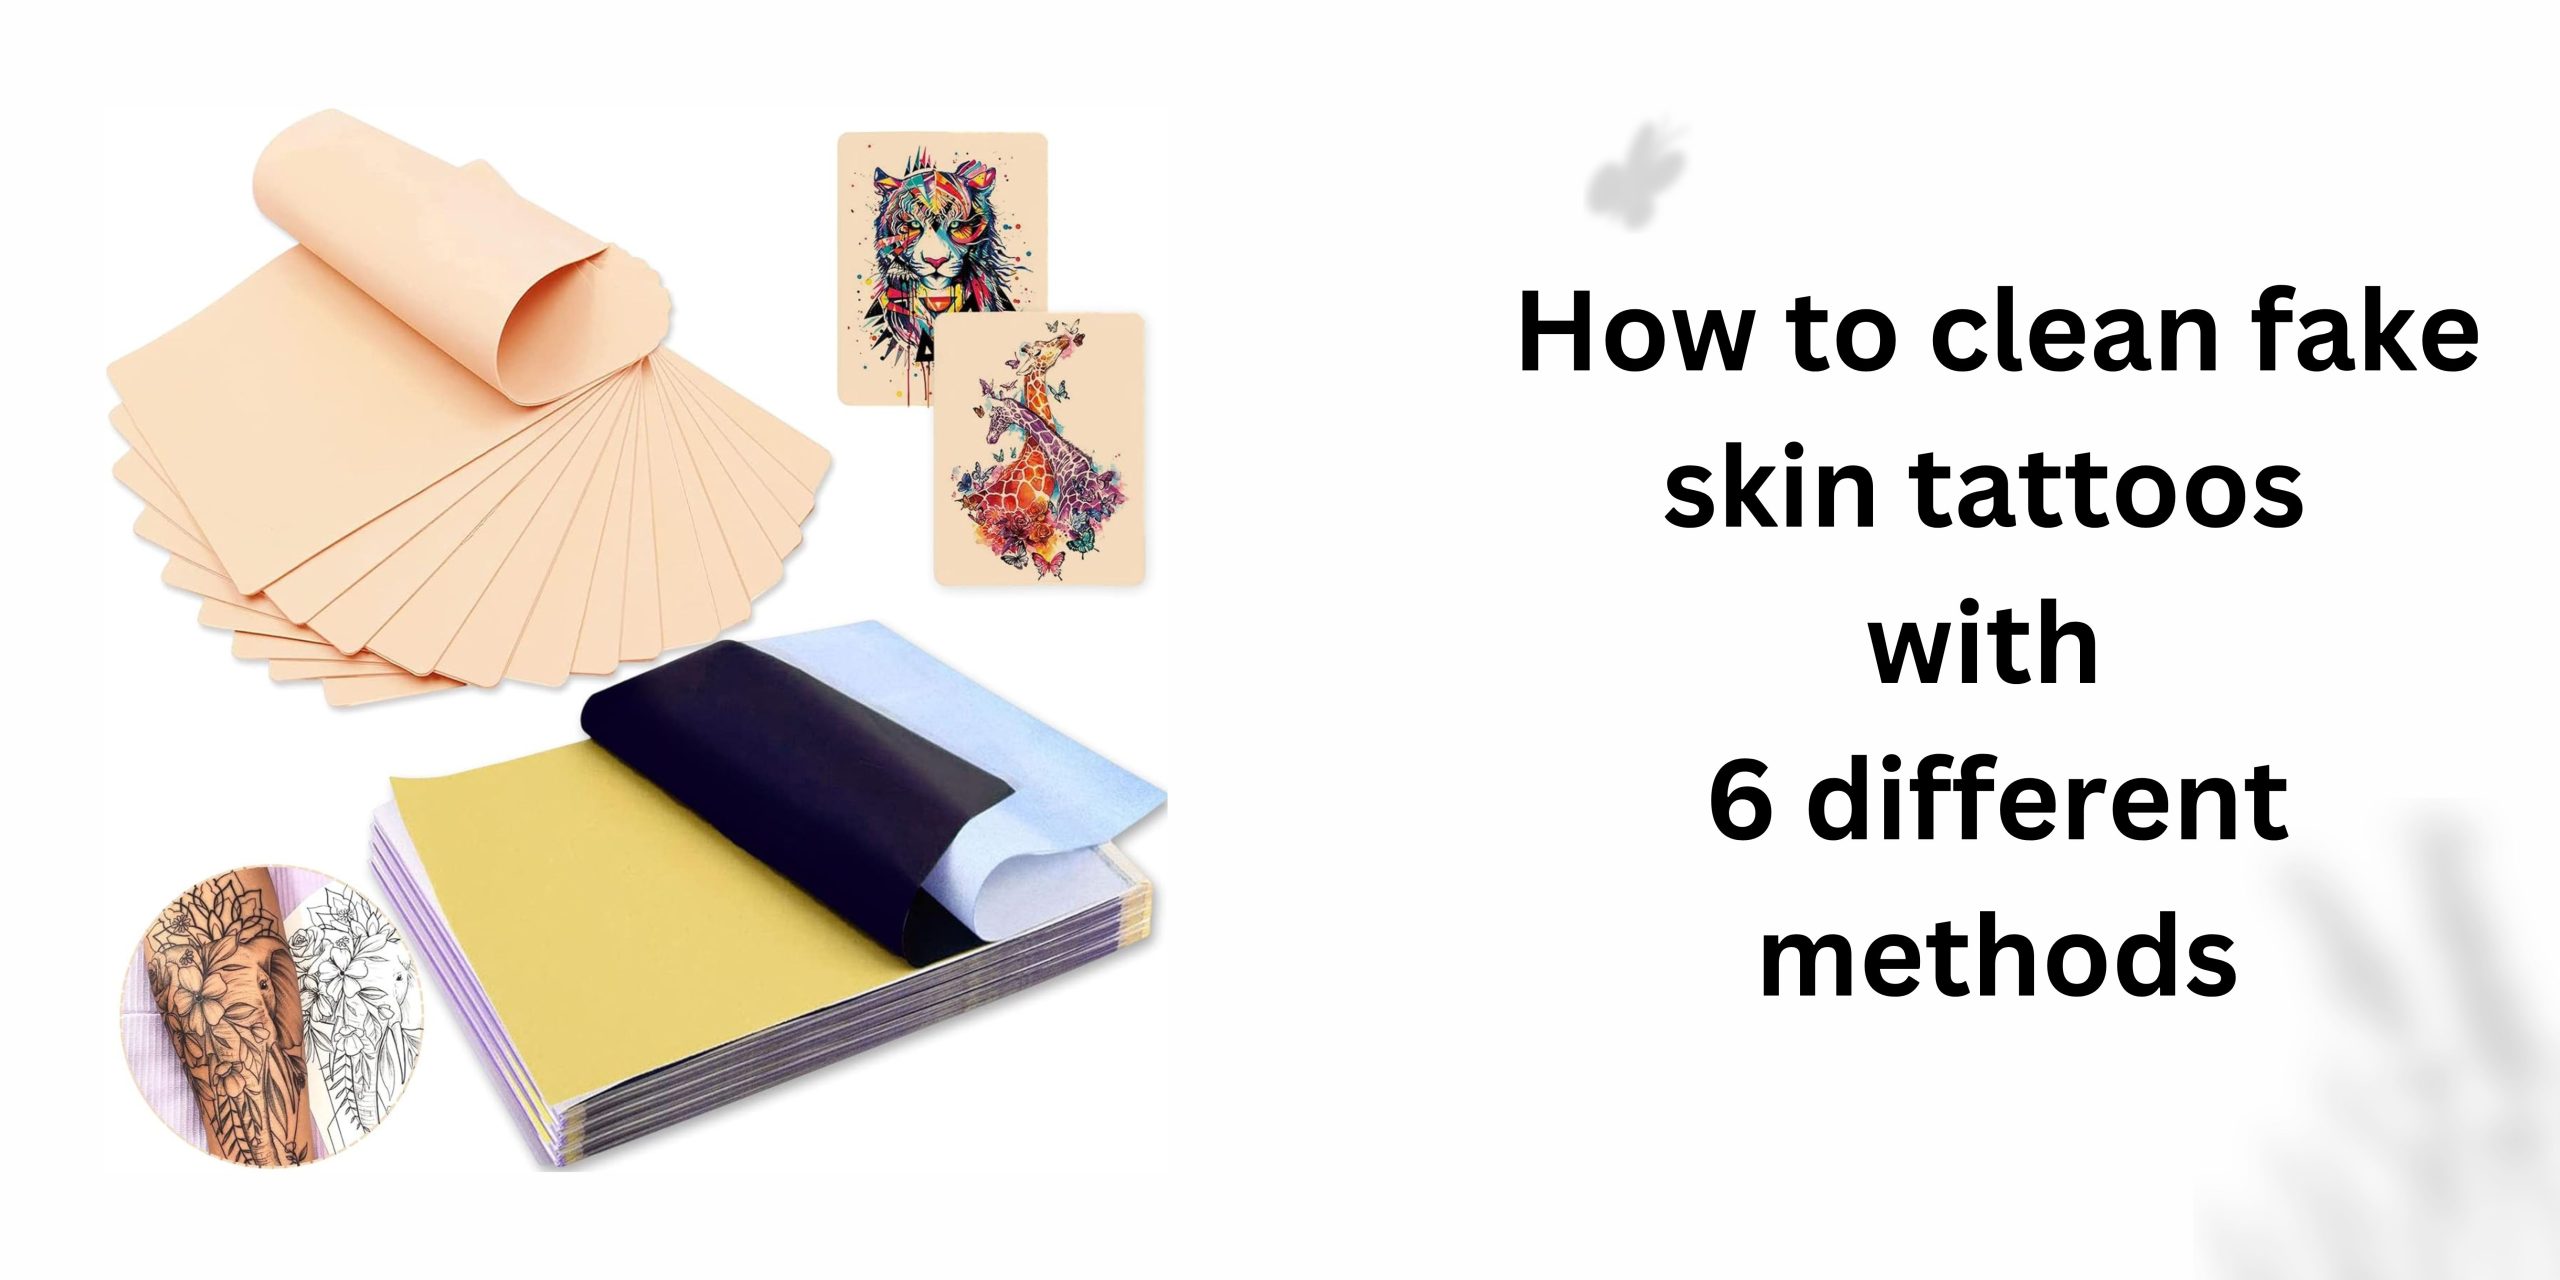 How to clean fake skin tattoos